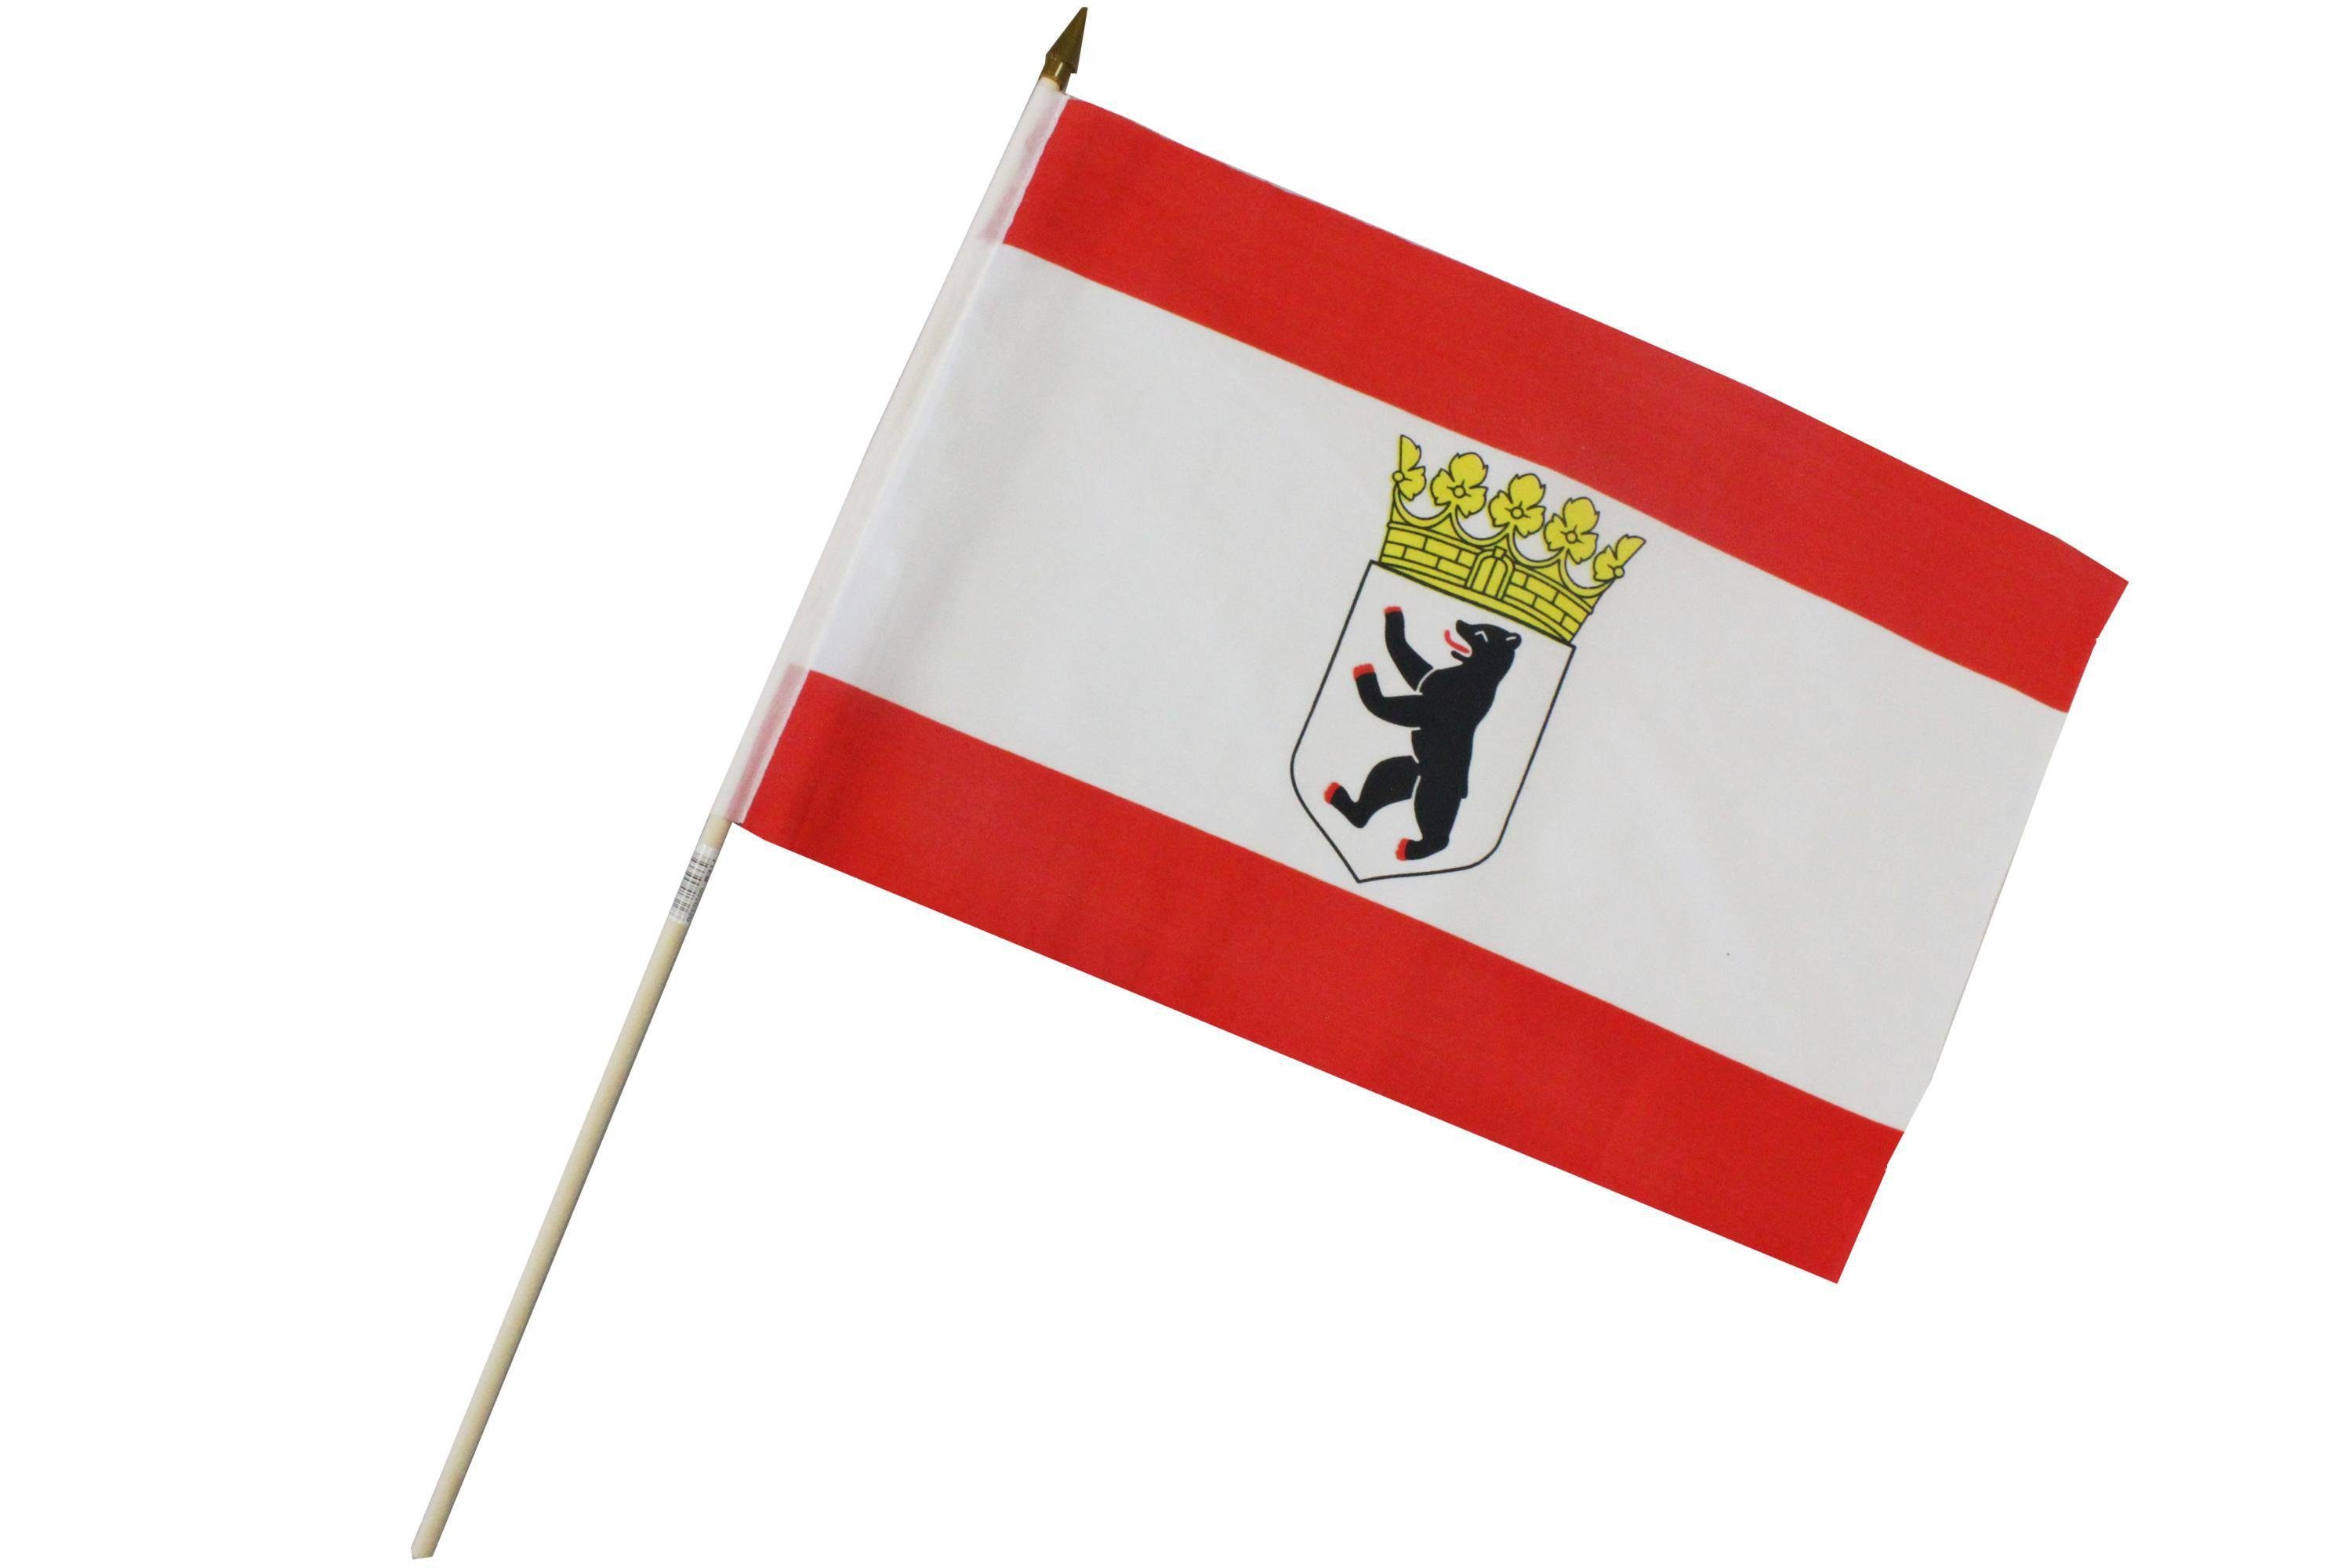 ELLUG Flagge Fahne Flagge 30 x 45cm mit Holzstab Höhe 60cm Handfahne Stockflagge Banner Fan Berlin